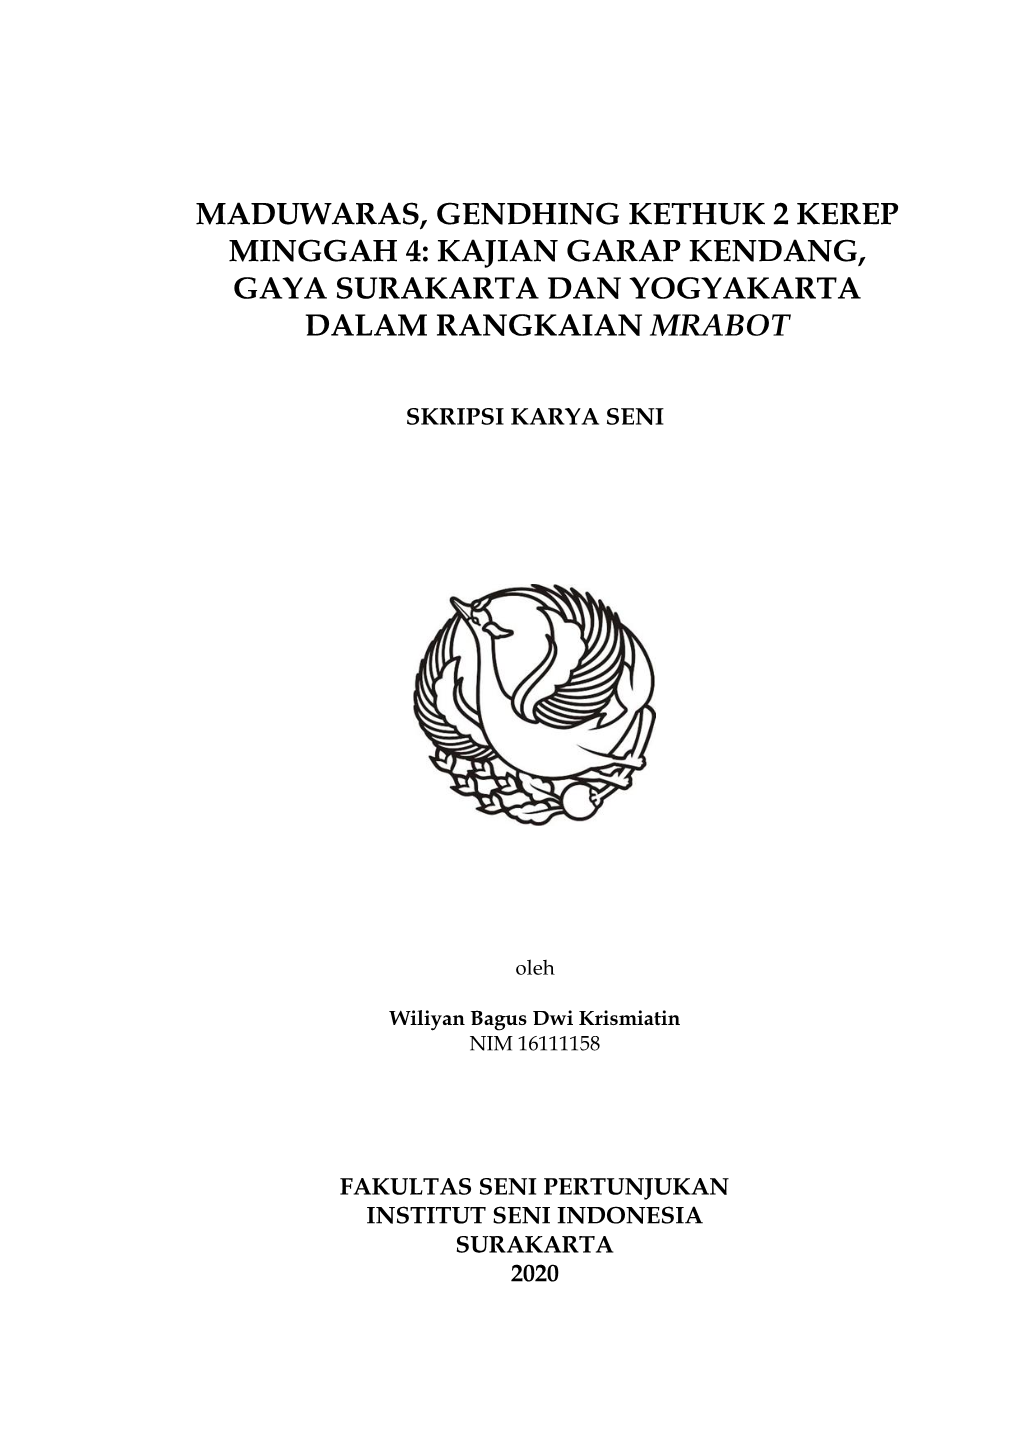 Maduwaras, Gendhing Kethuk 2 Kerep Minggah 4: Kajian Garap Kendang, Gaya Surakarta Dan Yogyakarta Dalam Rangkaian Mrabot